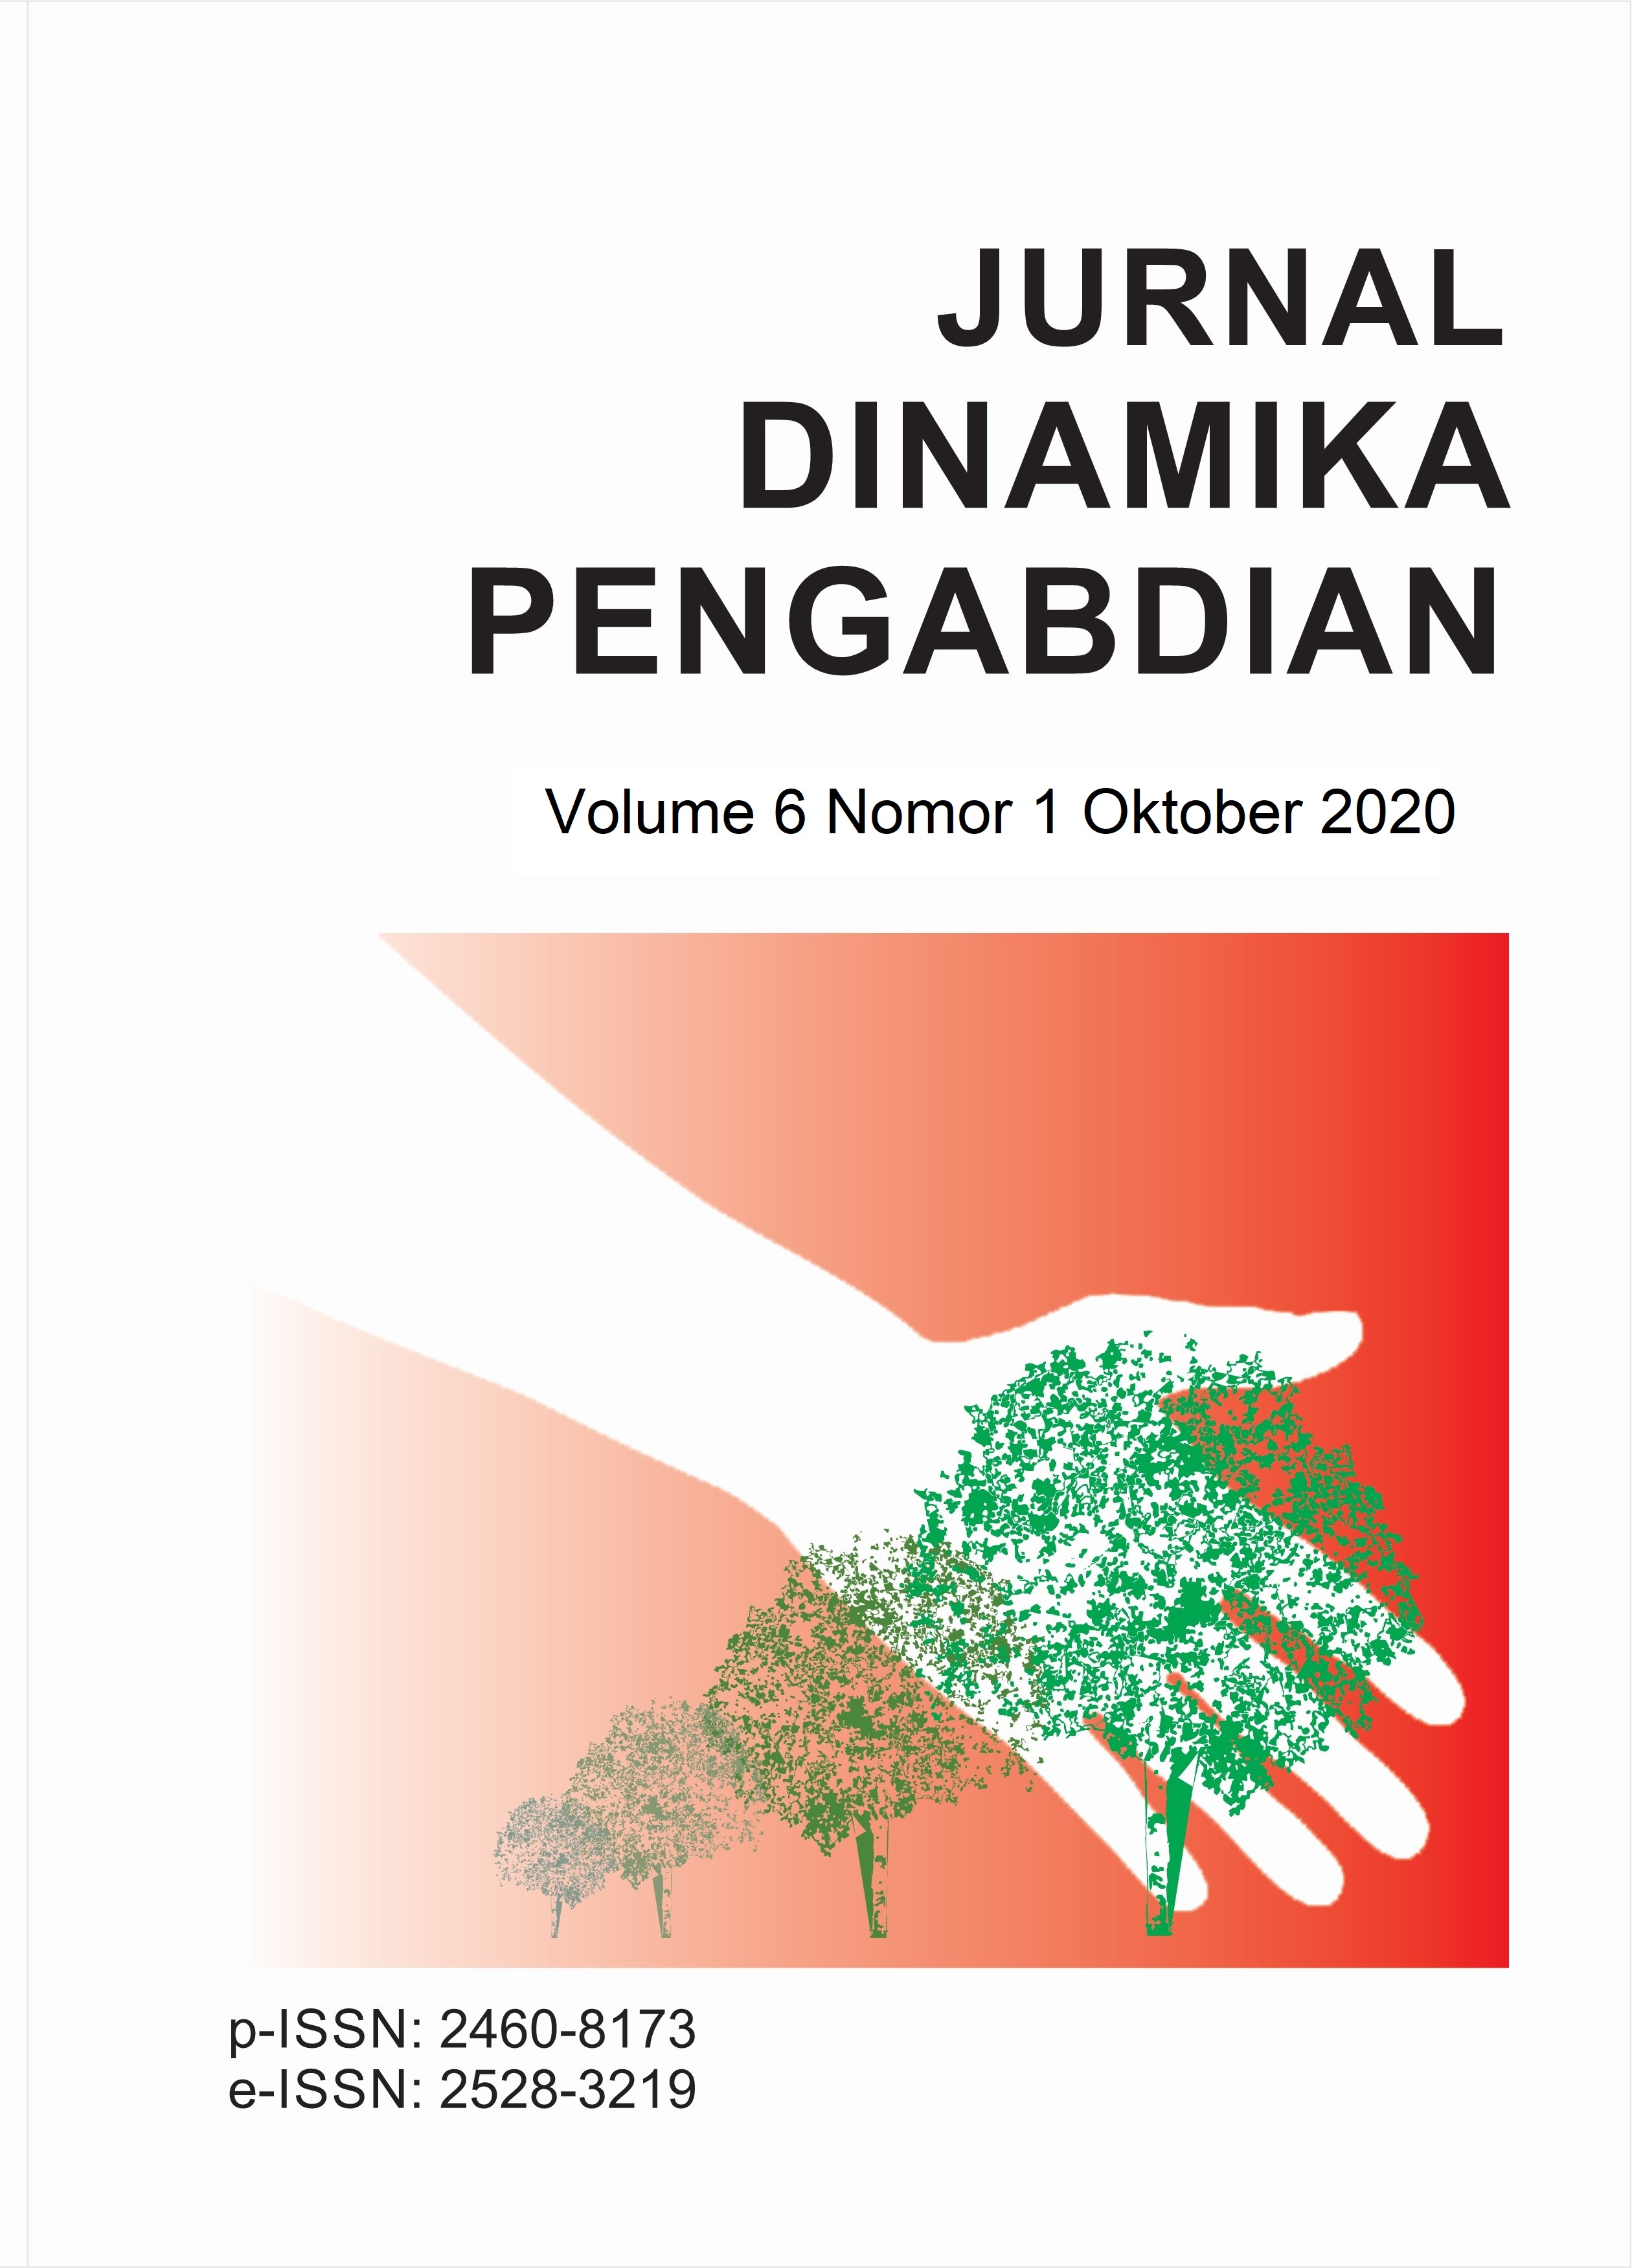 					View Vol. 6 No. 1 (2020): JURNAL DINAMIKA PENGABDIAN VOL. 6 NO. 1 OKTOBER 2020
				